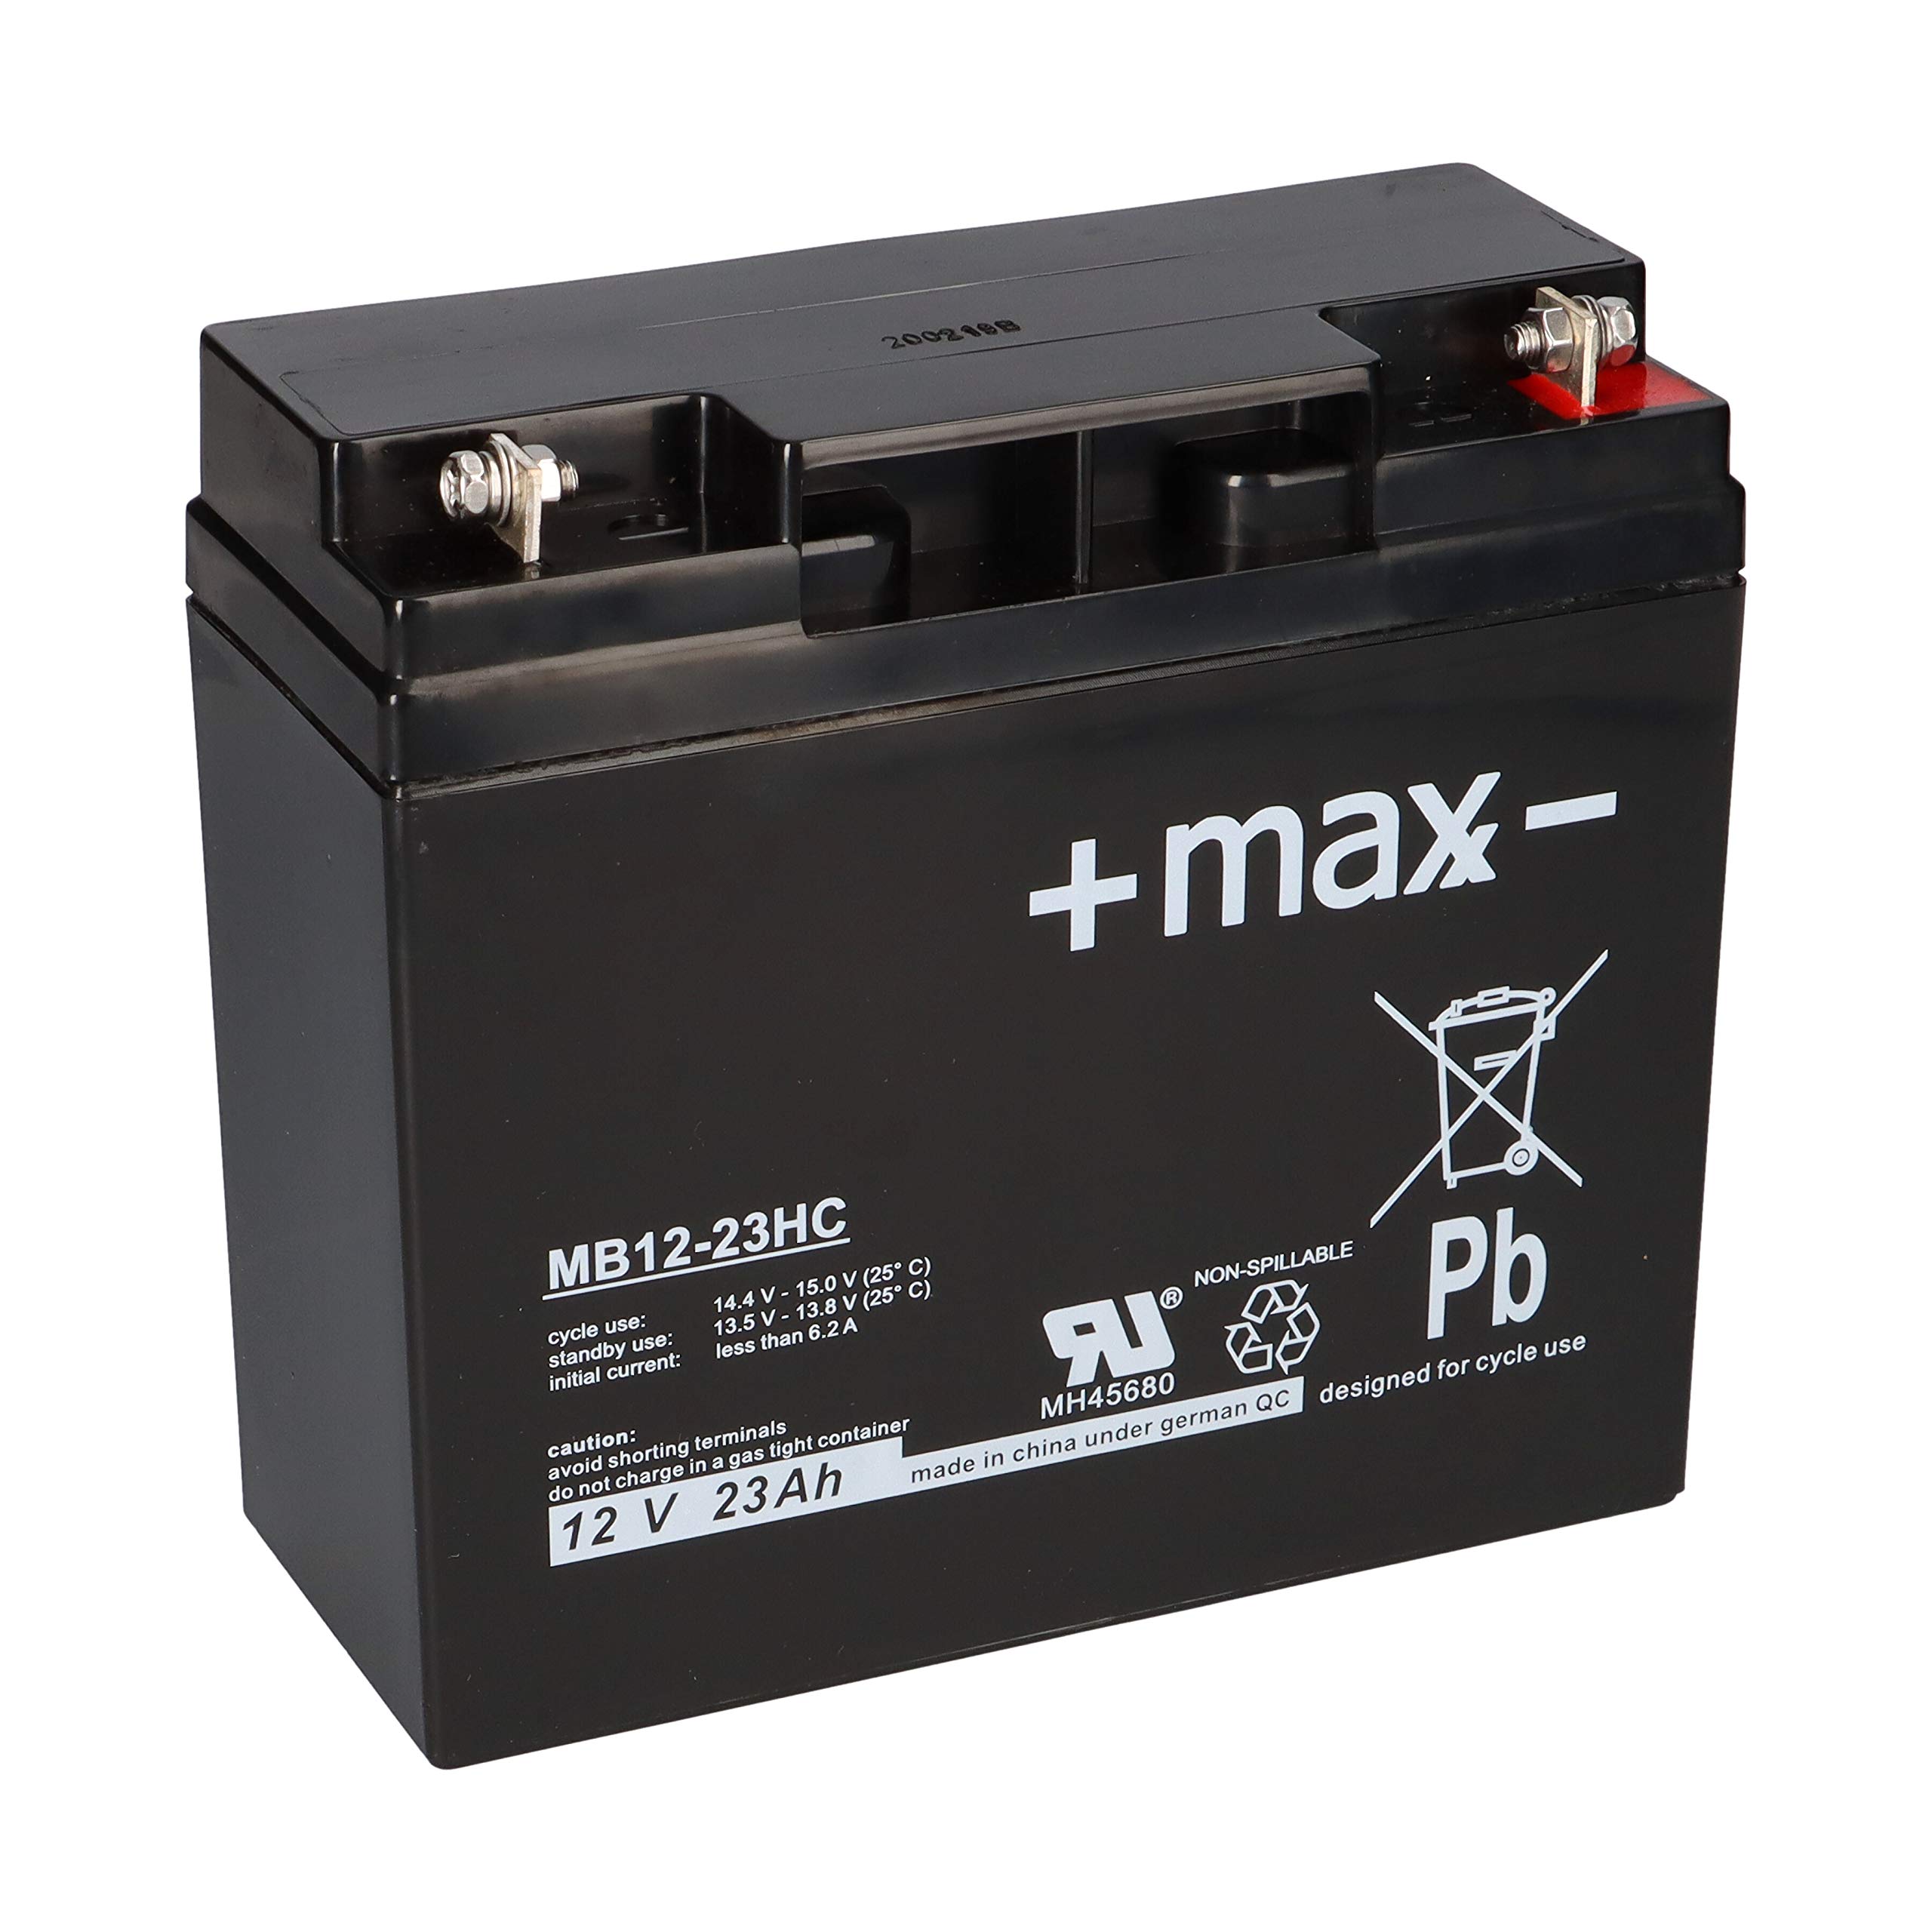 Bleiakku + maxx - 12V 23Ah MB12-23HC AGM wiederaufladbar zyklenfest 17Ah 18Ah 19Ah 20Ah 22Ah